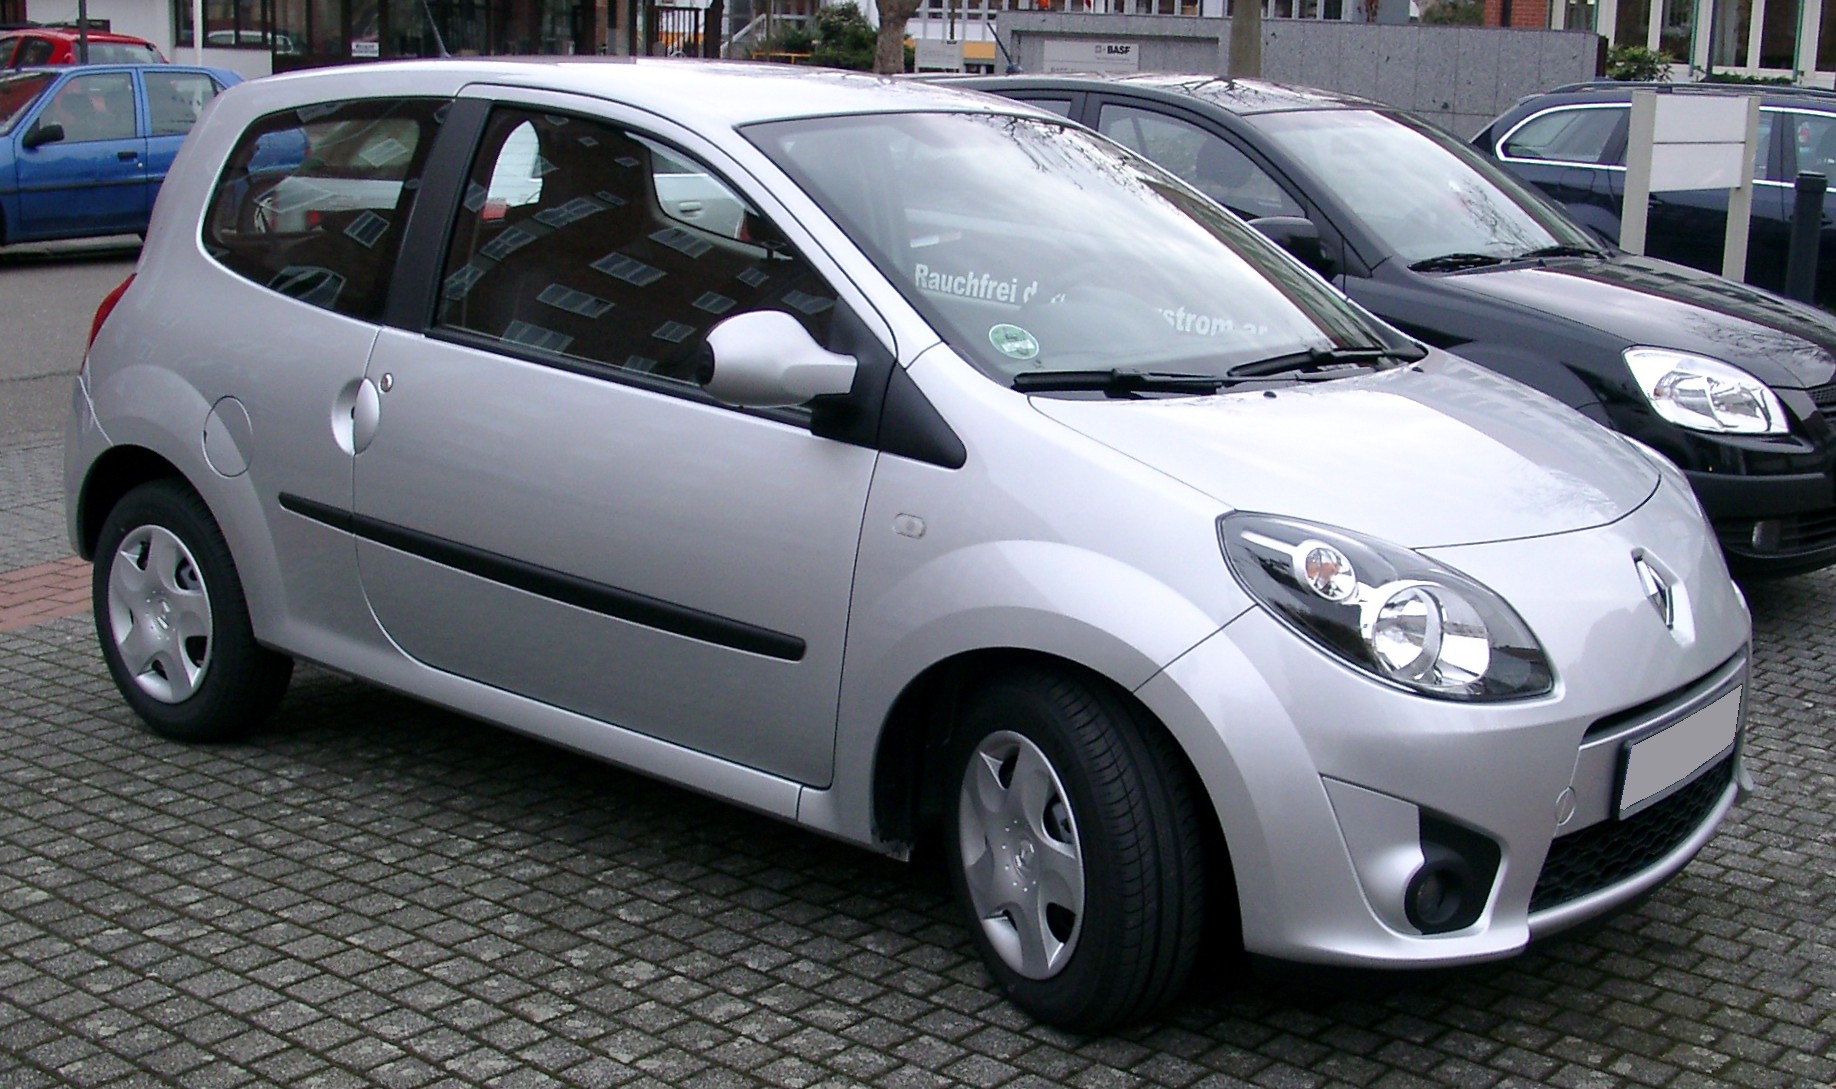 File:Renault Twingo.jpg - Wikimedia Commons